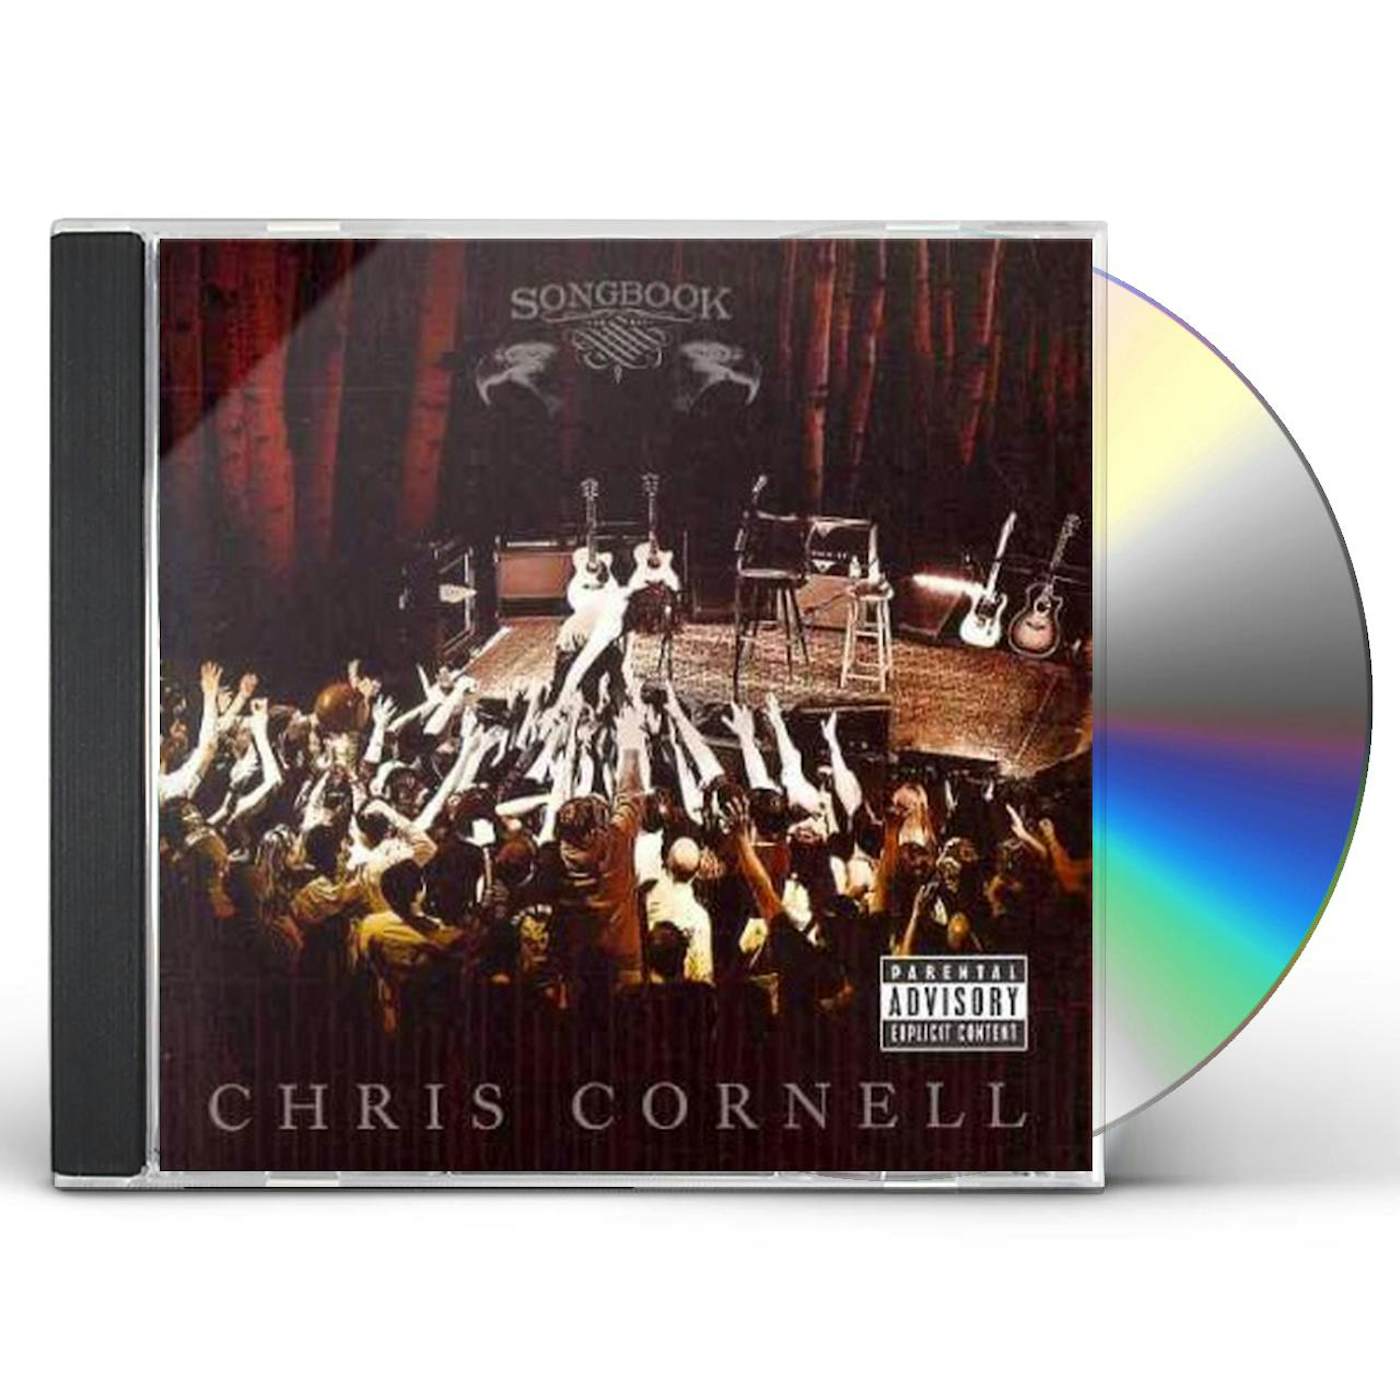 Chris Cornell SONGBOOK CD